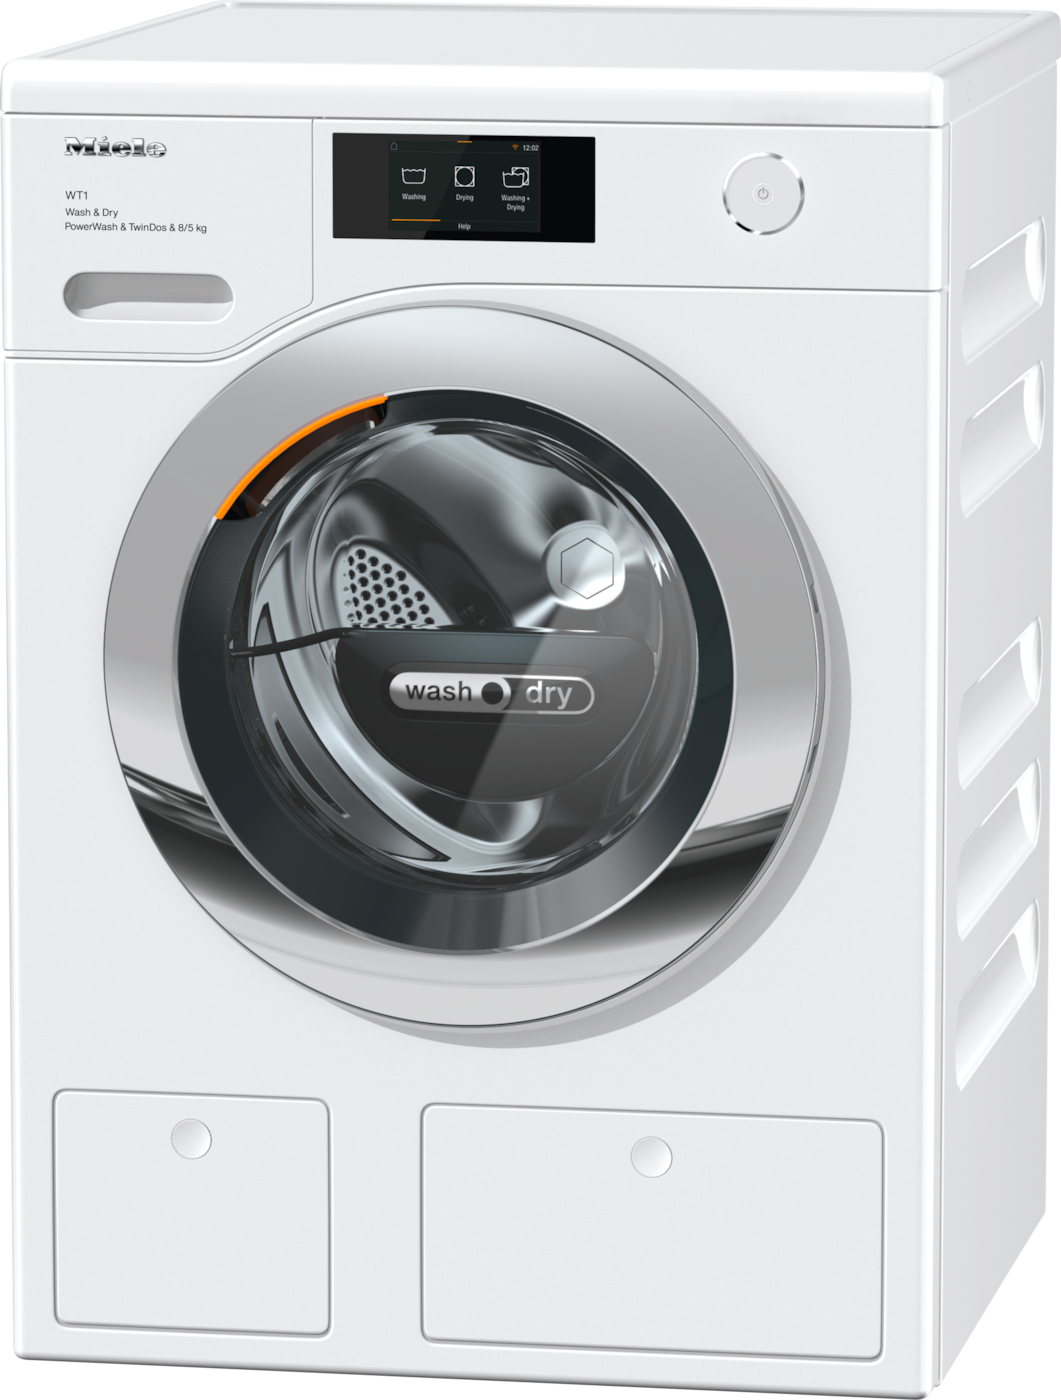 WTR860WPM PWash&TDos 8/5kg - WT1 washer-dryer: 